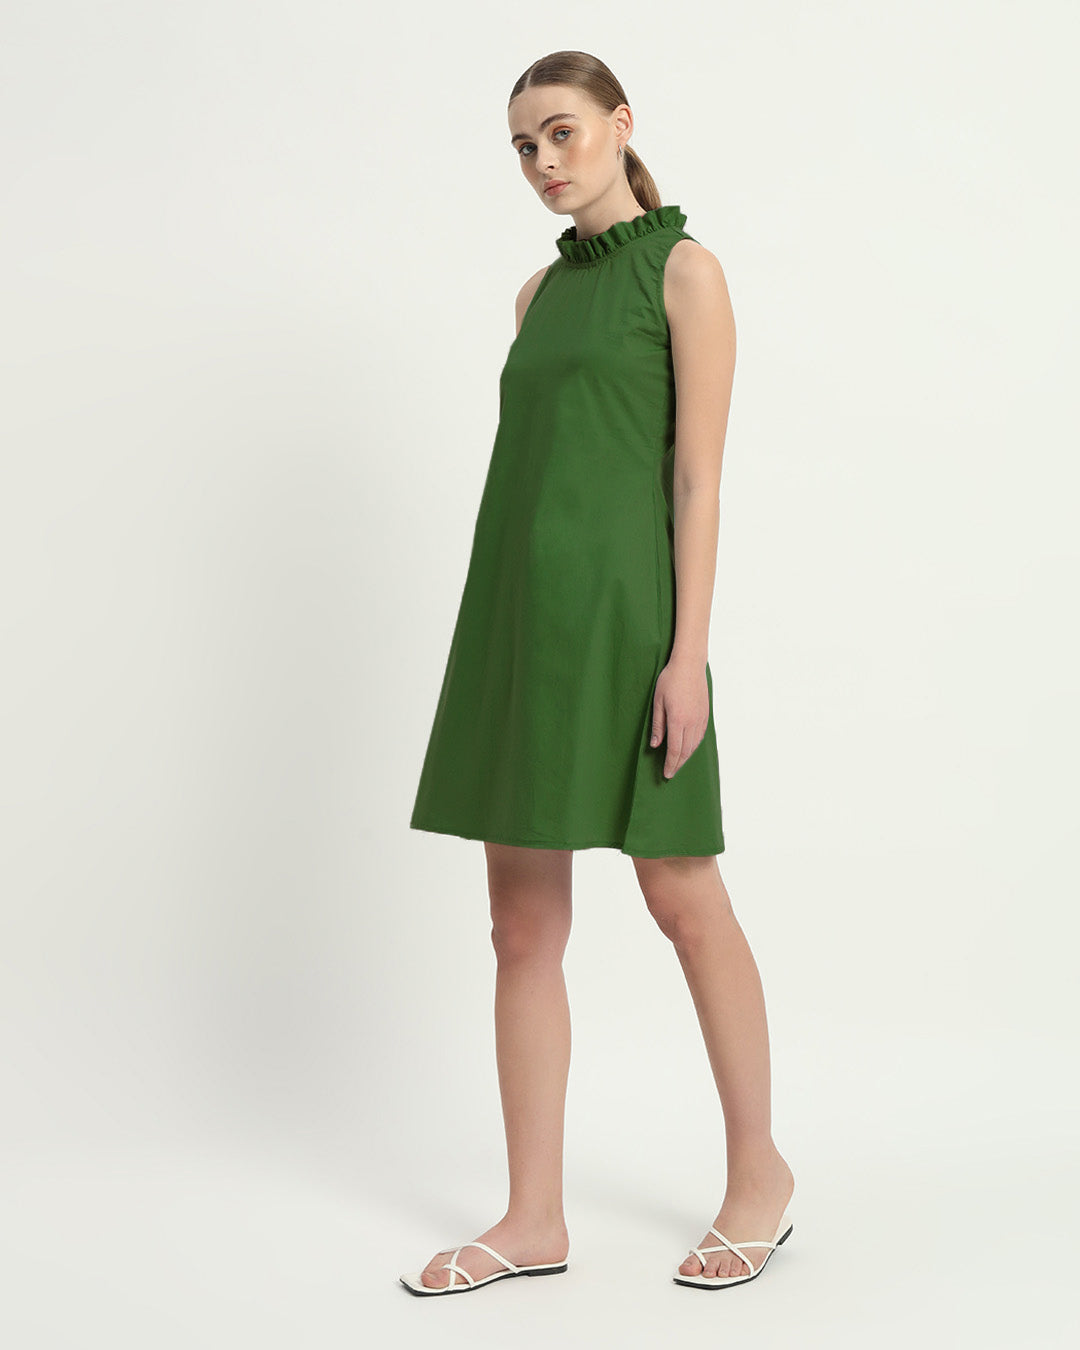 The Angelica Emerald Cotton Dress